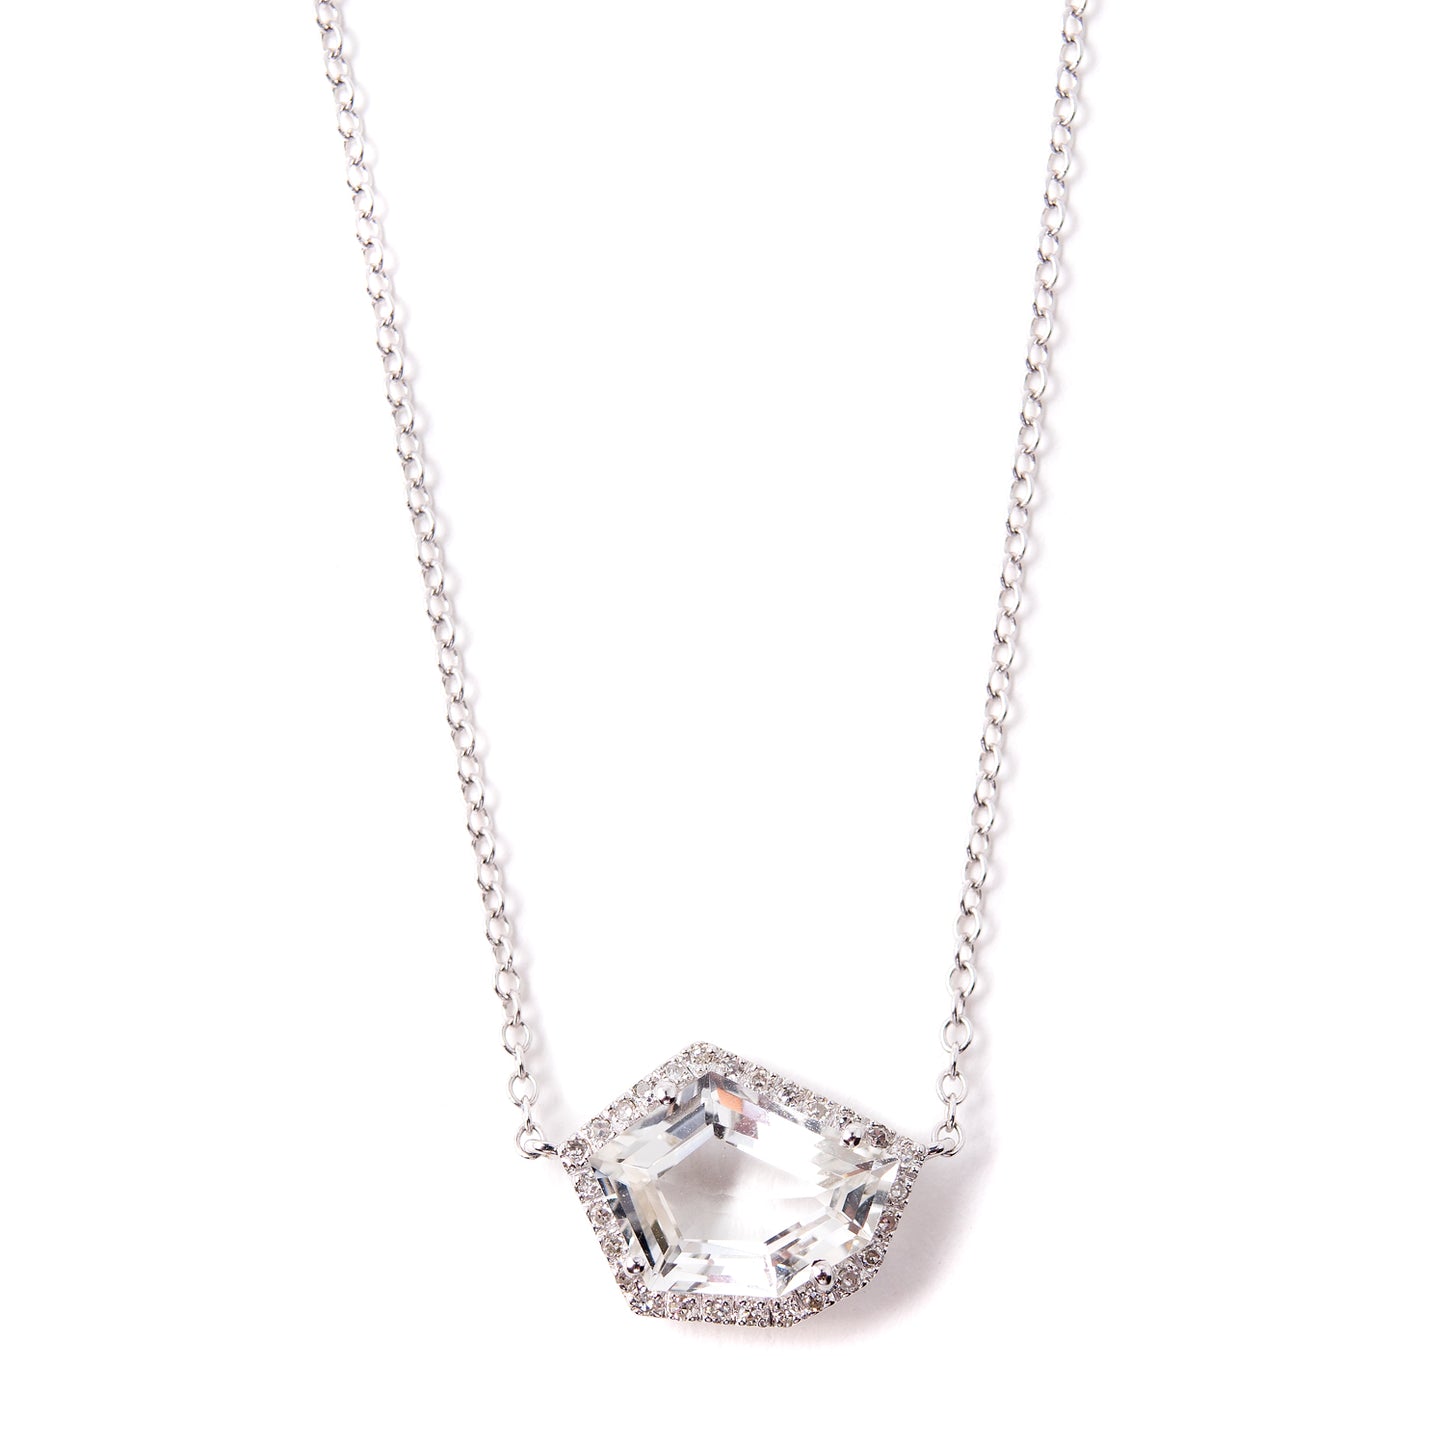 white topaz november birthstone necklace diamond pave 14k gold janna conner